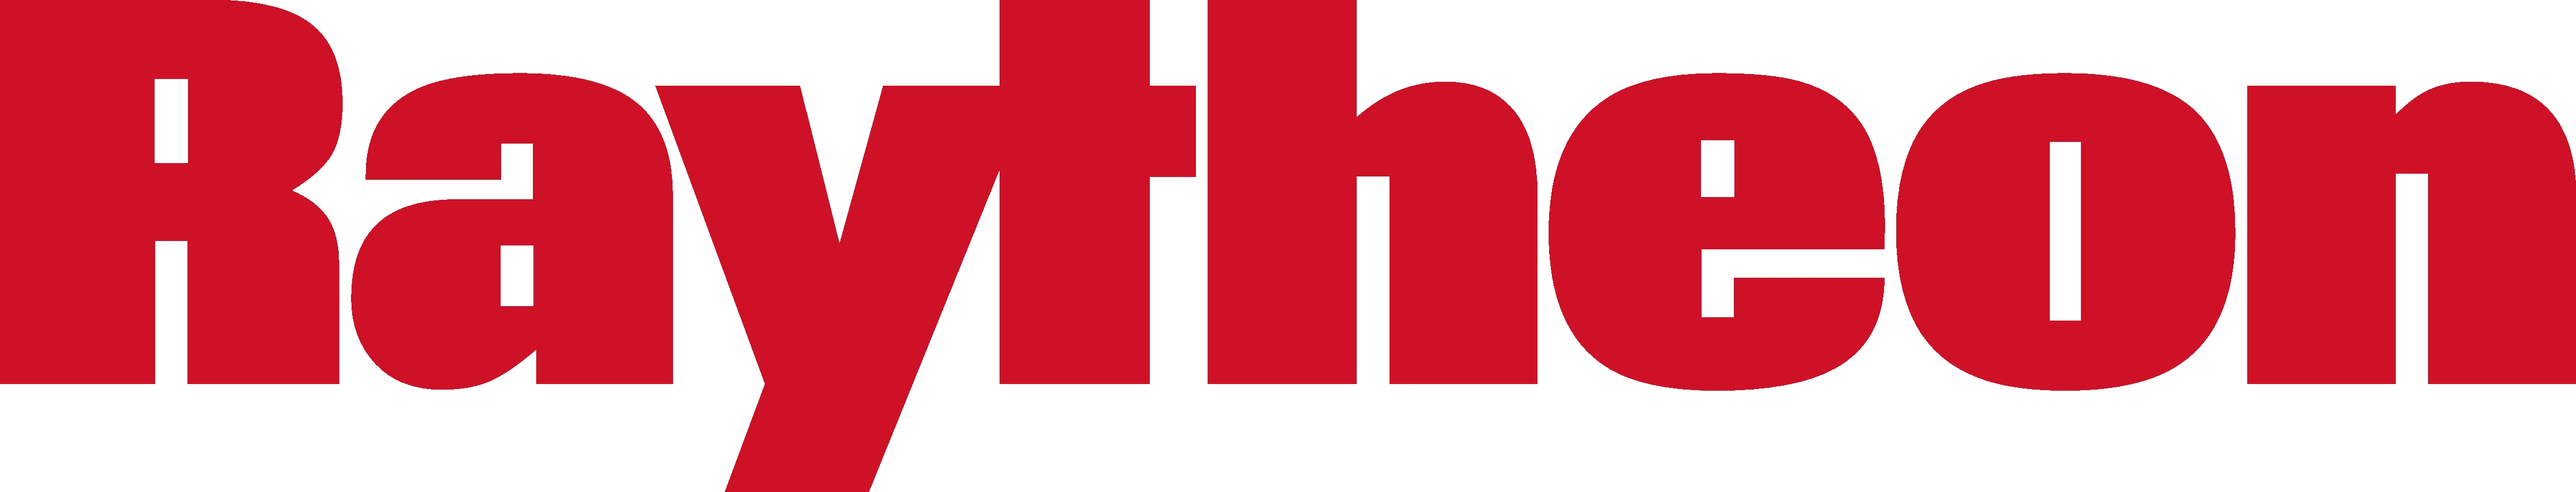 Raytheon-Logo-HiRes5